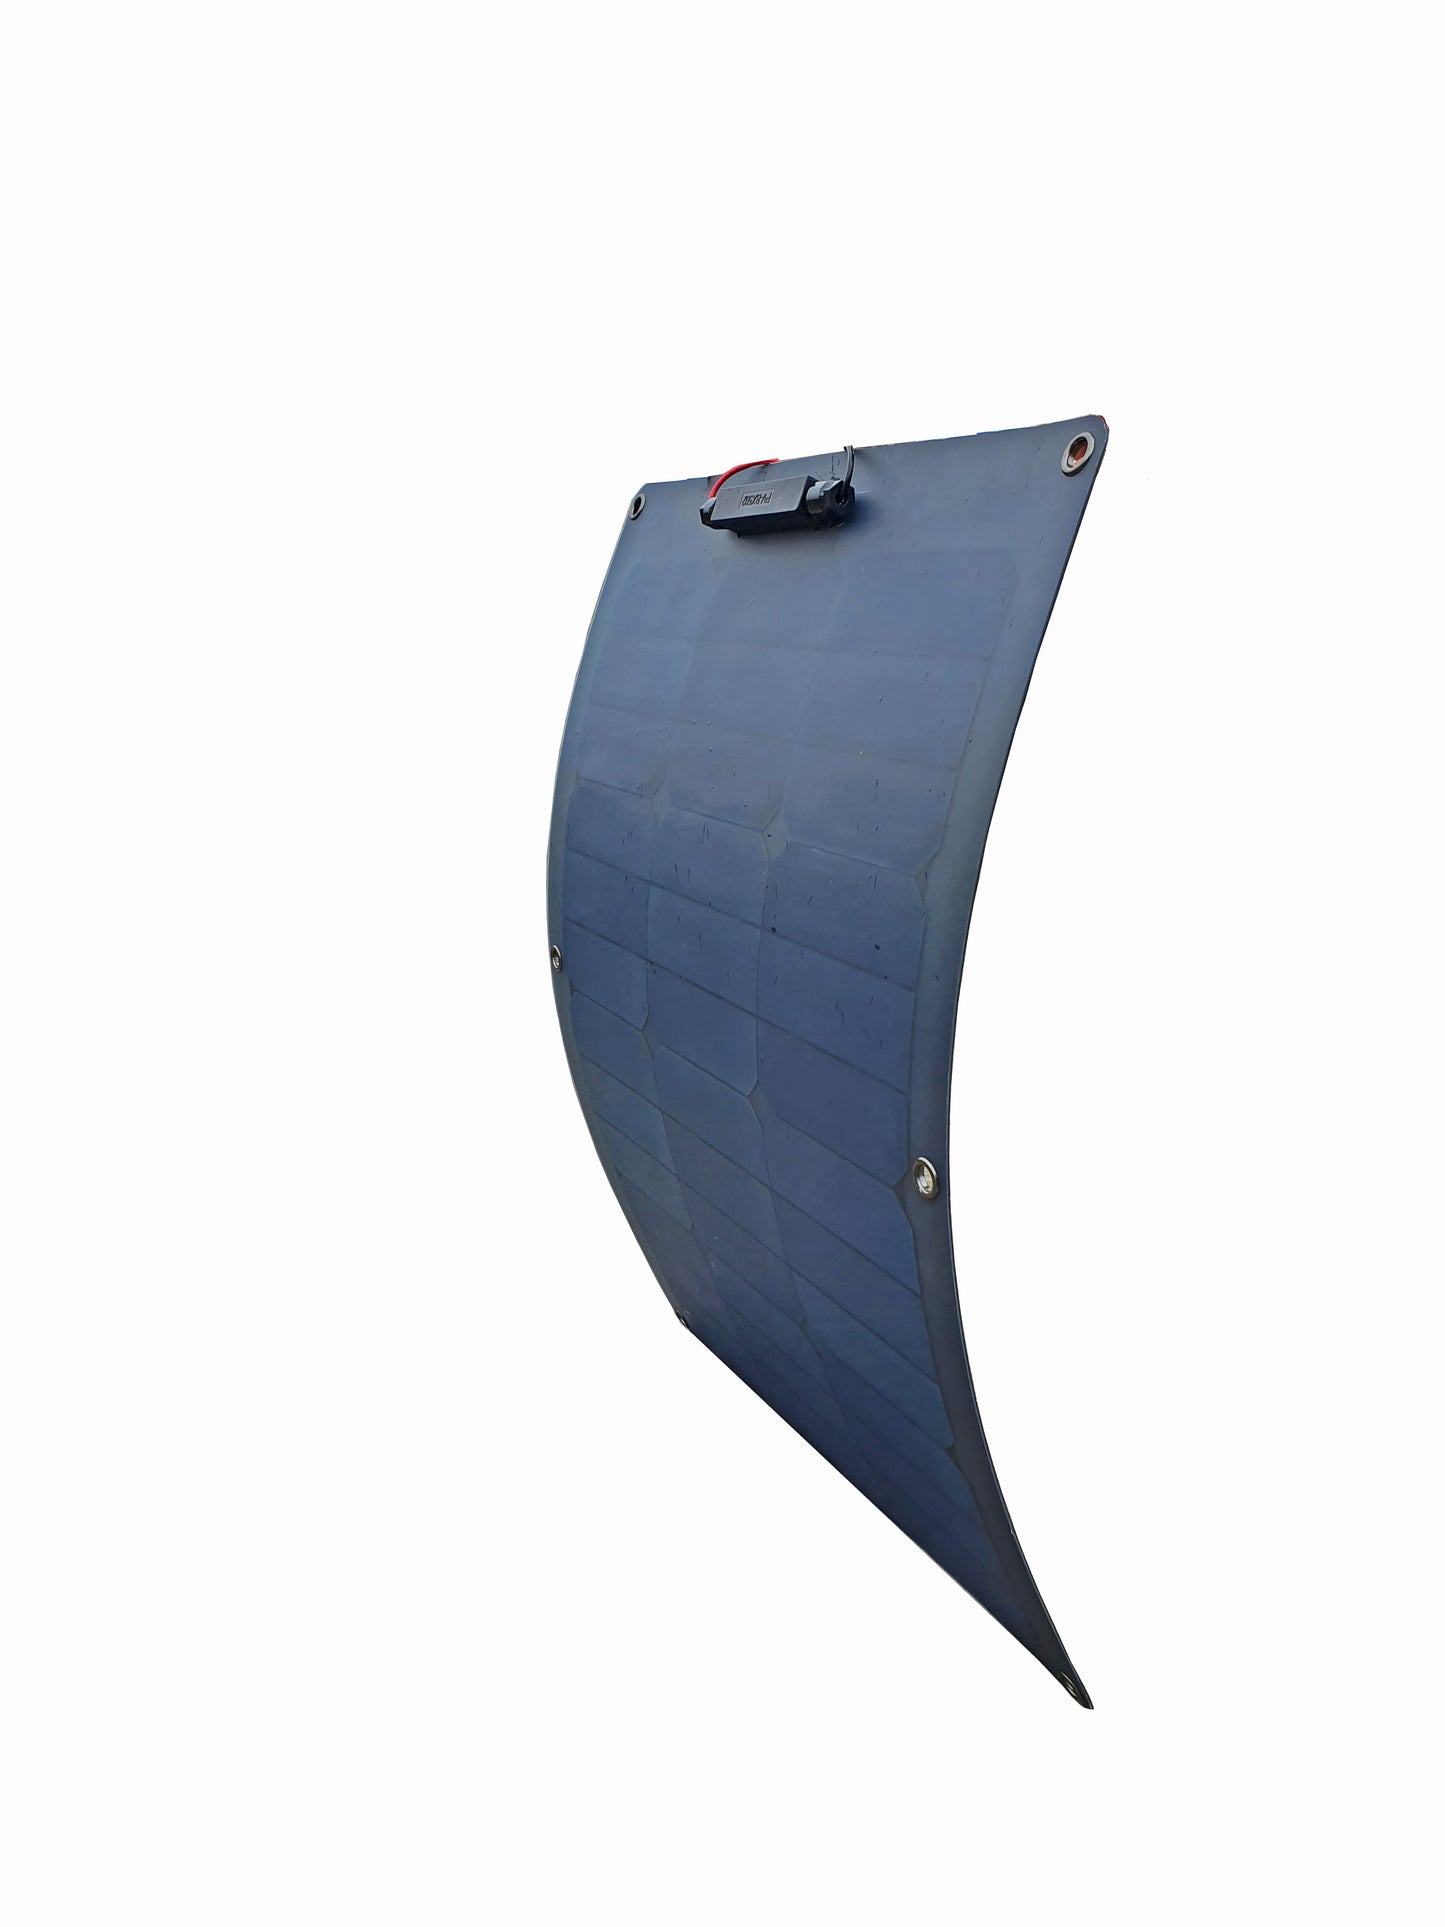 35 Watt Semi-Flex Monocrystalline Solar Panel for 12-Volt Charging (Refurbished)